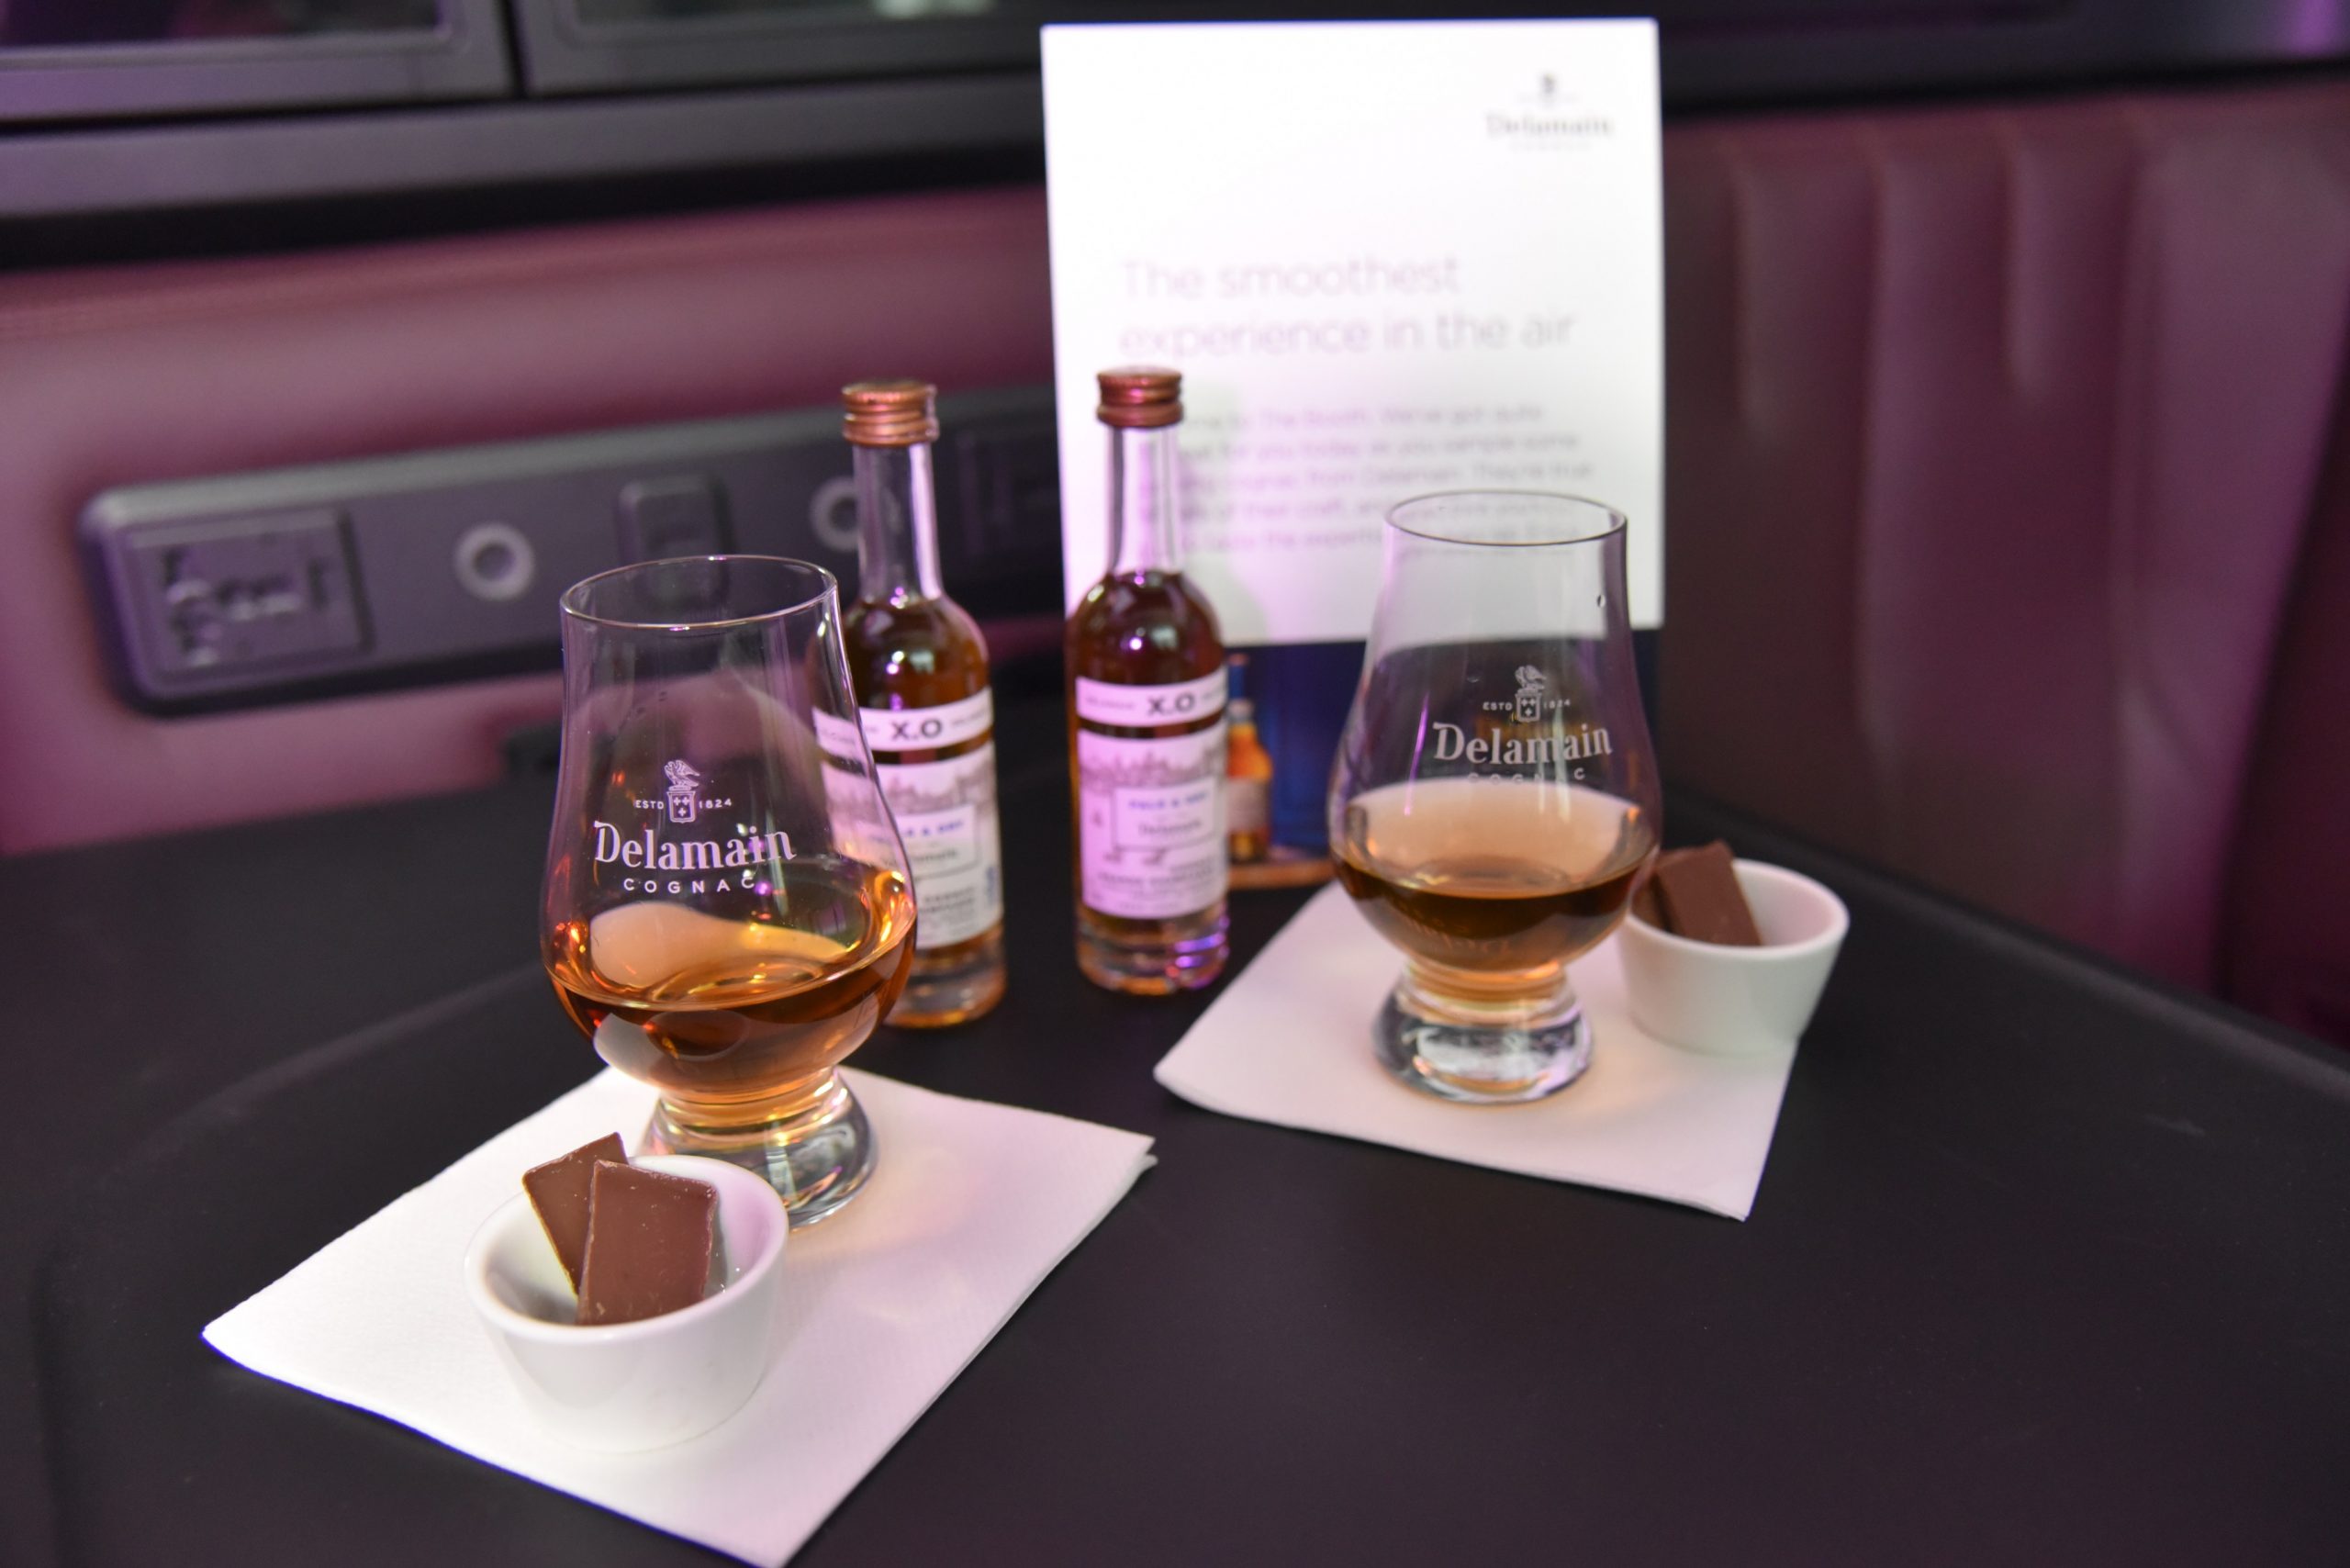 Delamain Cognac Partners with Virgin Atlantic on in-flight experiences